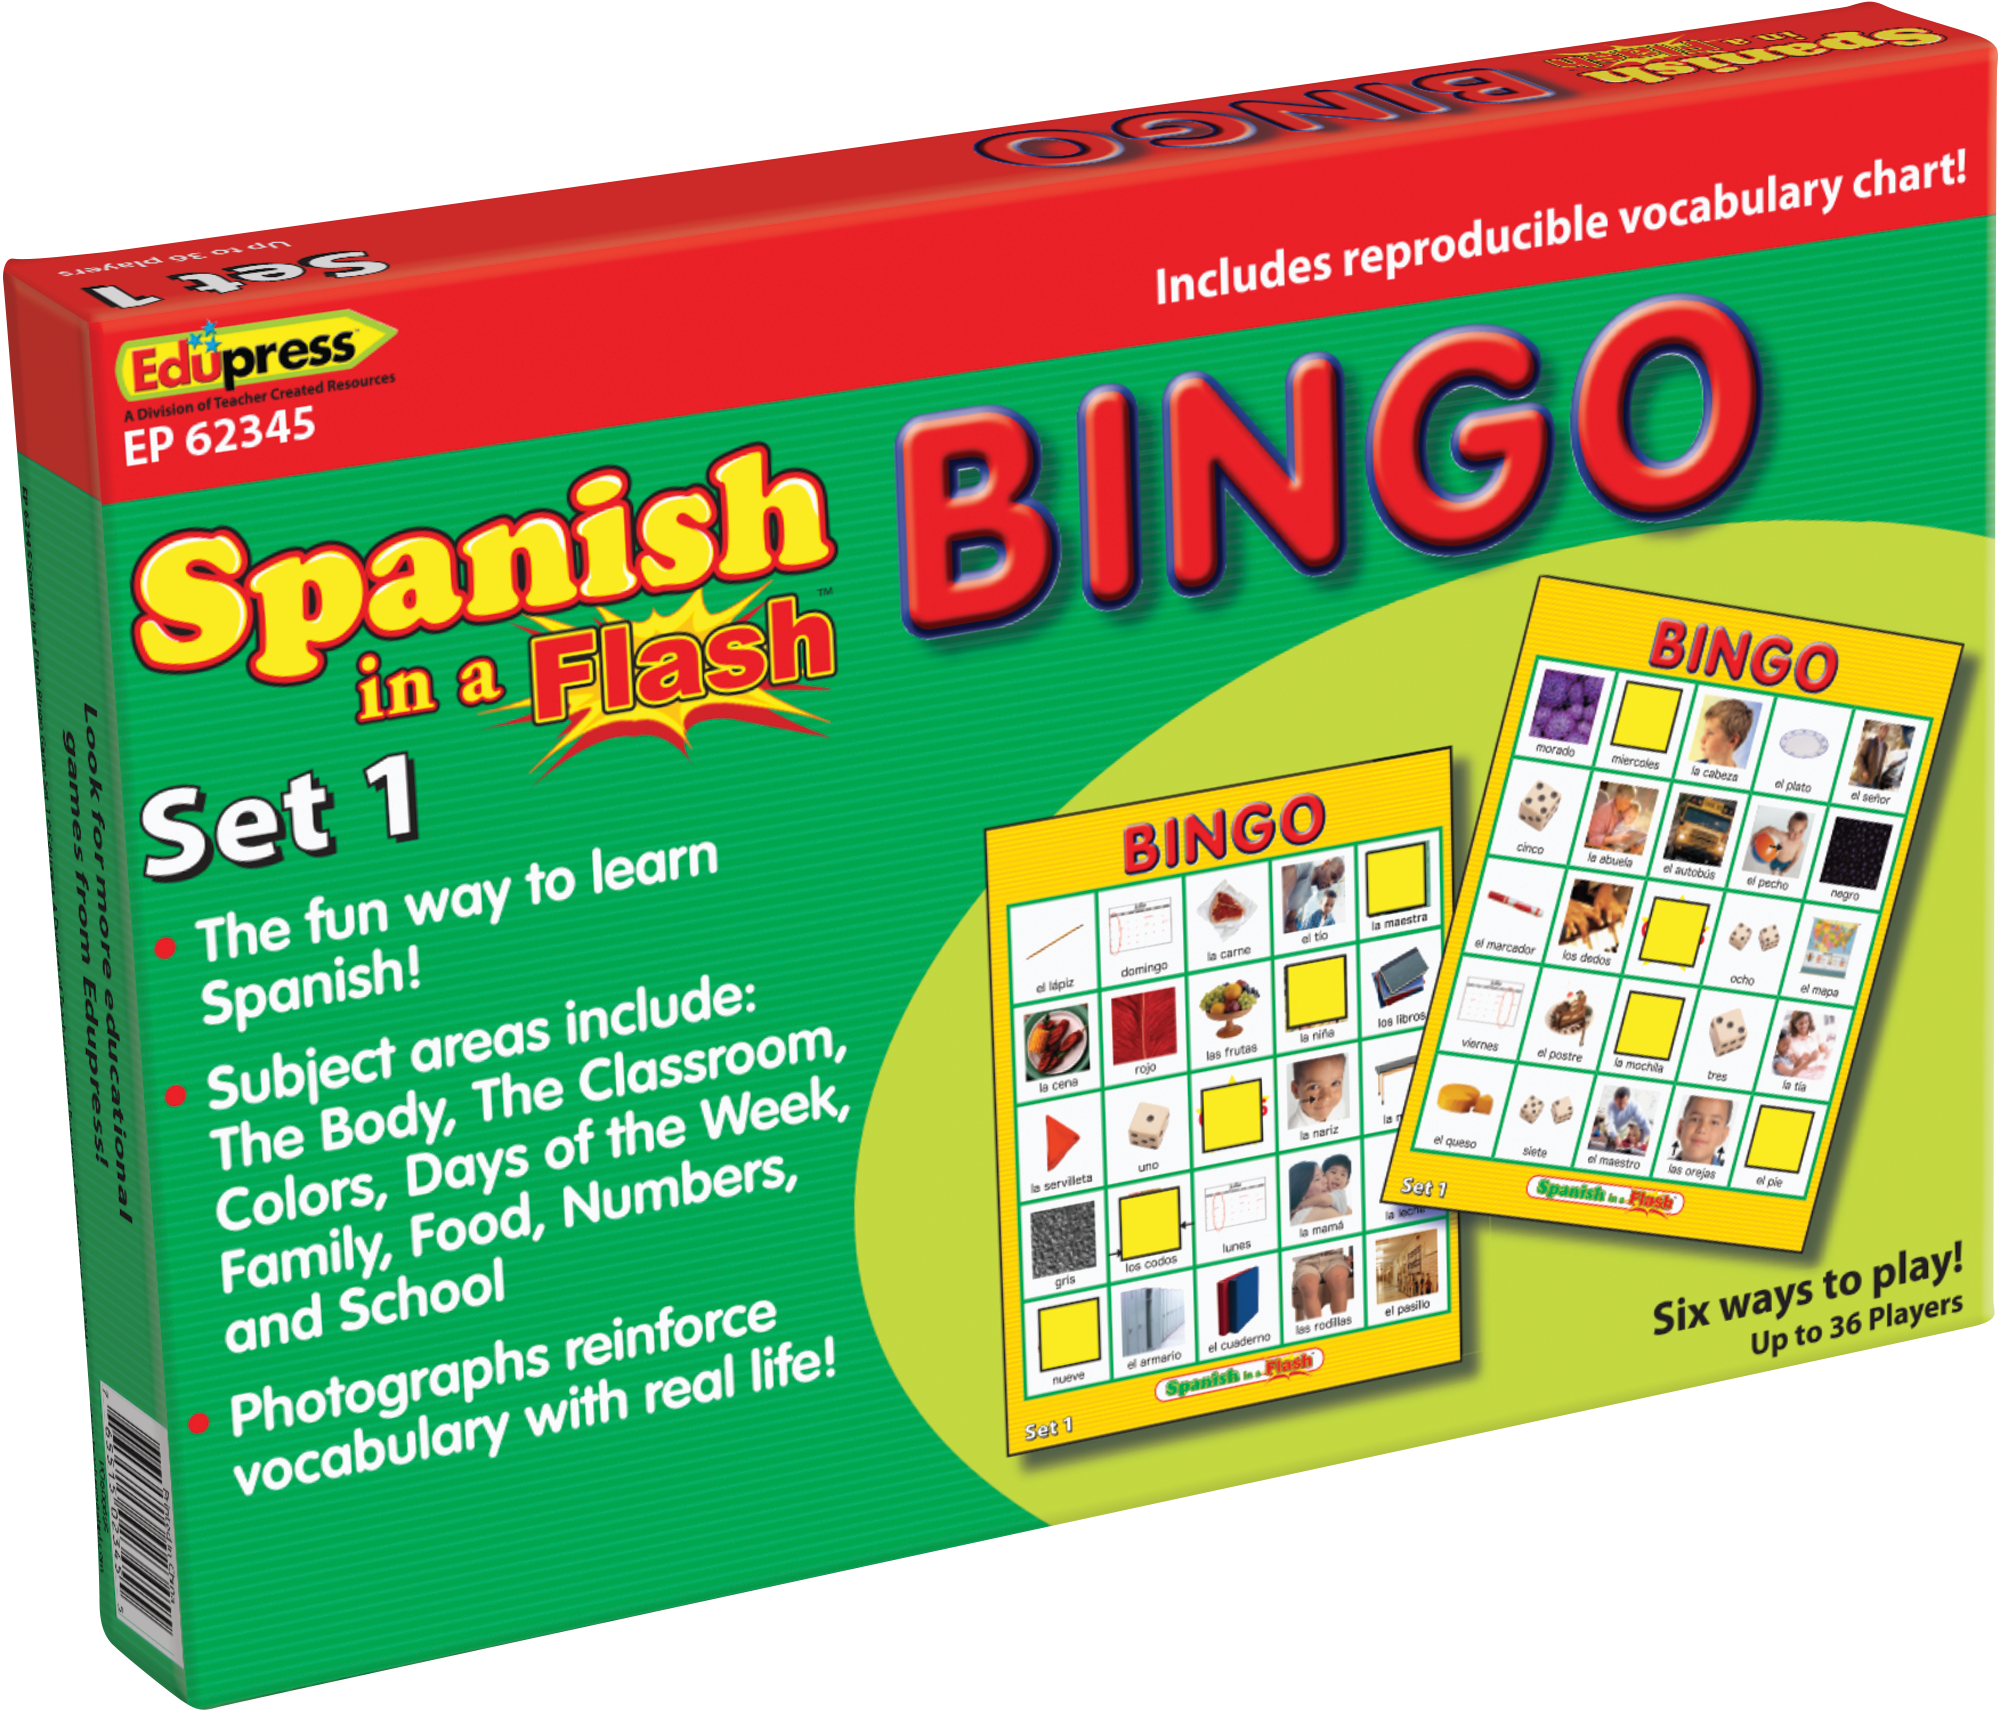 Spanish in a Flashâ„¢ Bingo Game Set 1